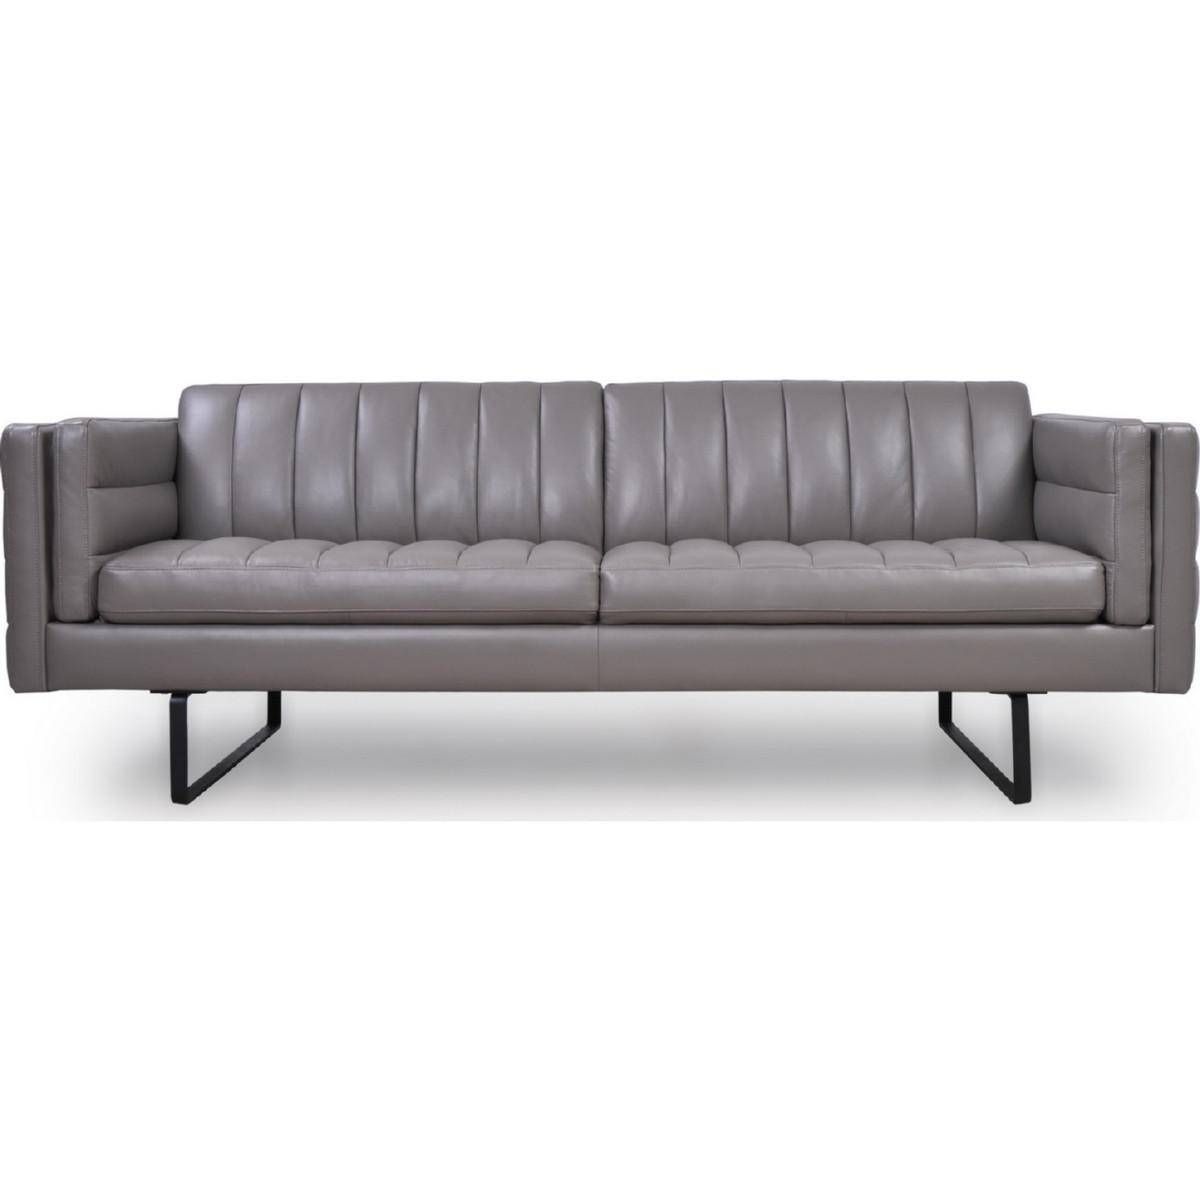 Orsen Tv Stands Regarding Latest Buy Moroni Orson 582 Sofa Armchair Set 2 Pcs In Gray, Top (View 3 of 25)